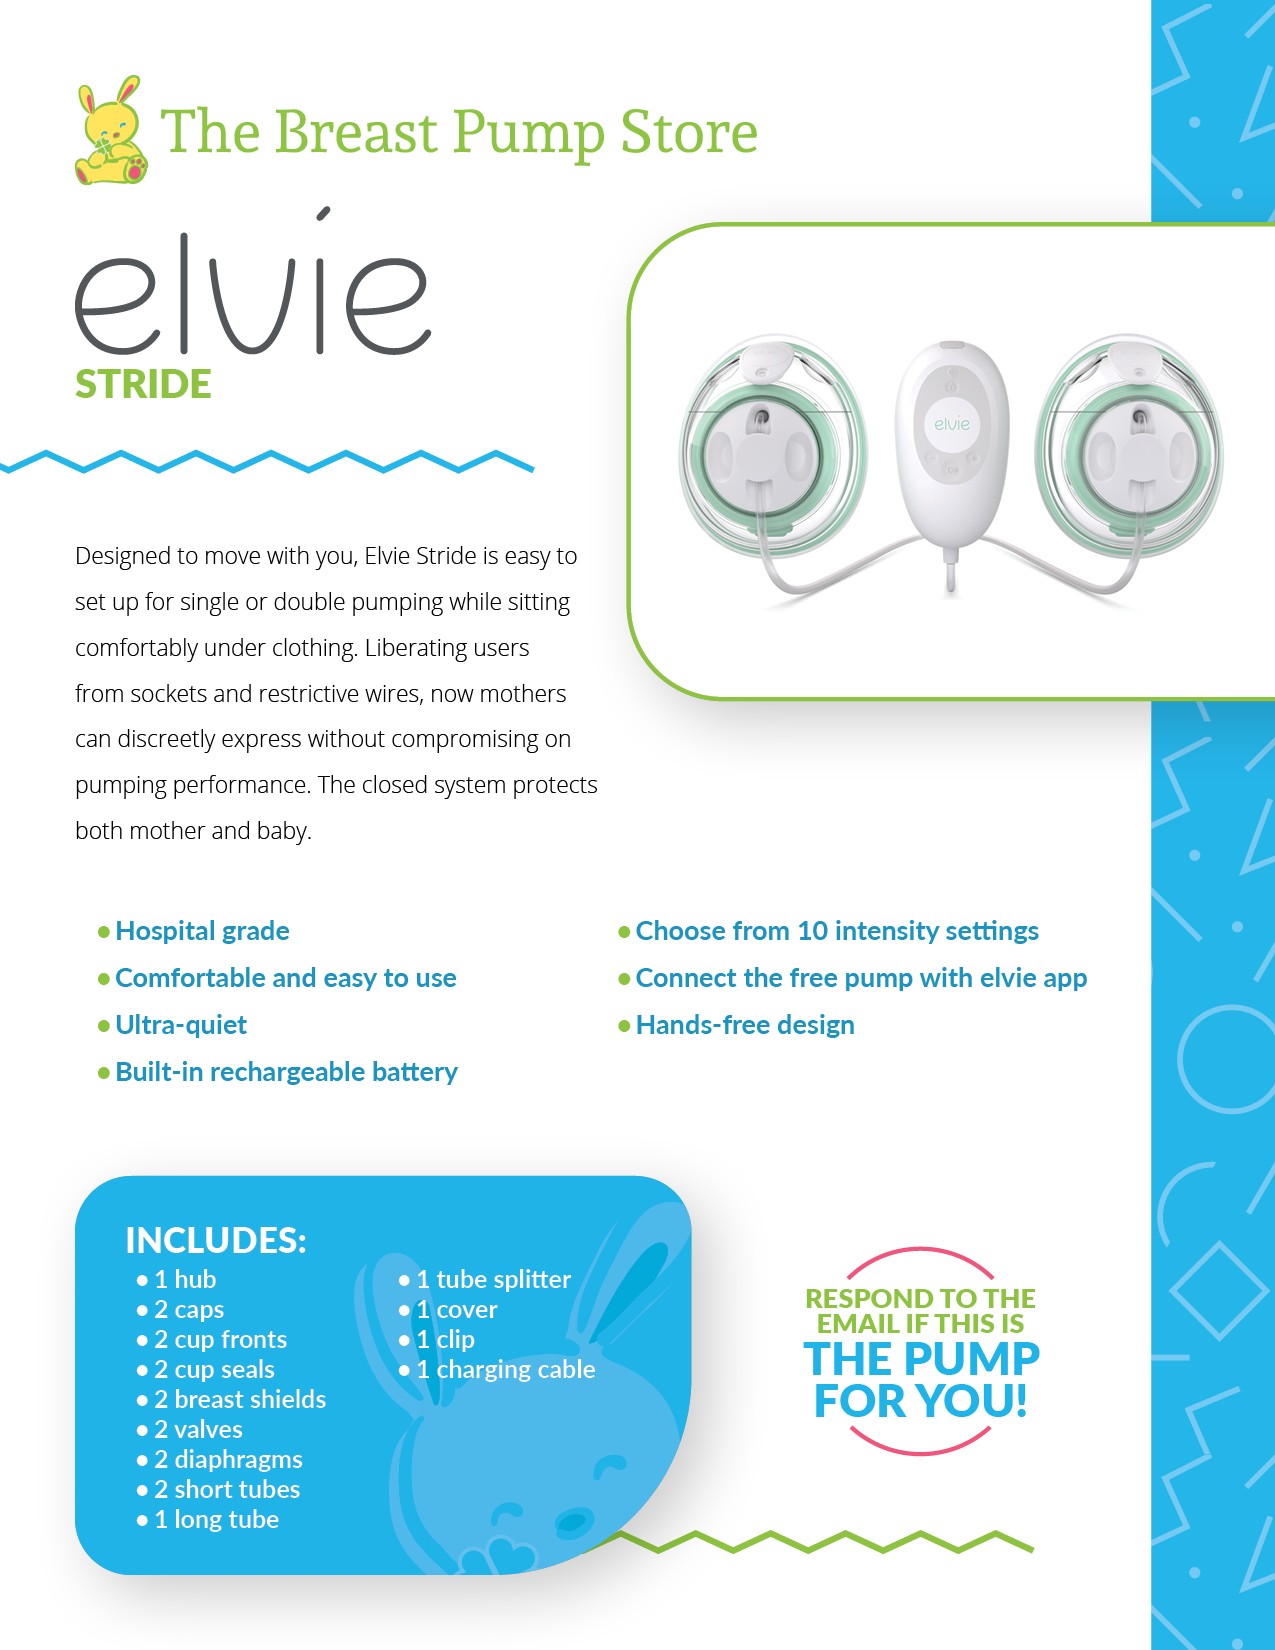 Elvie Stride Breast Pump - Free